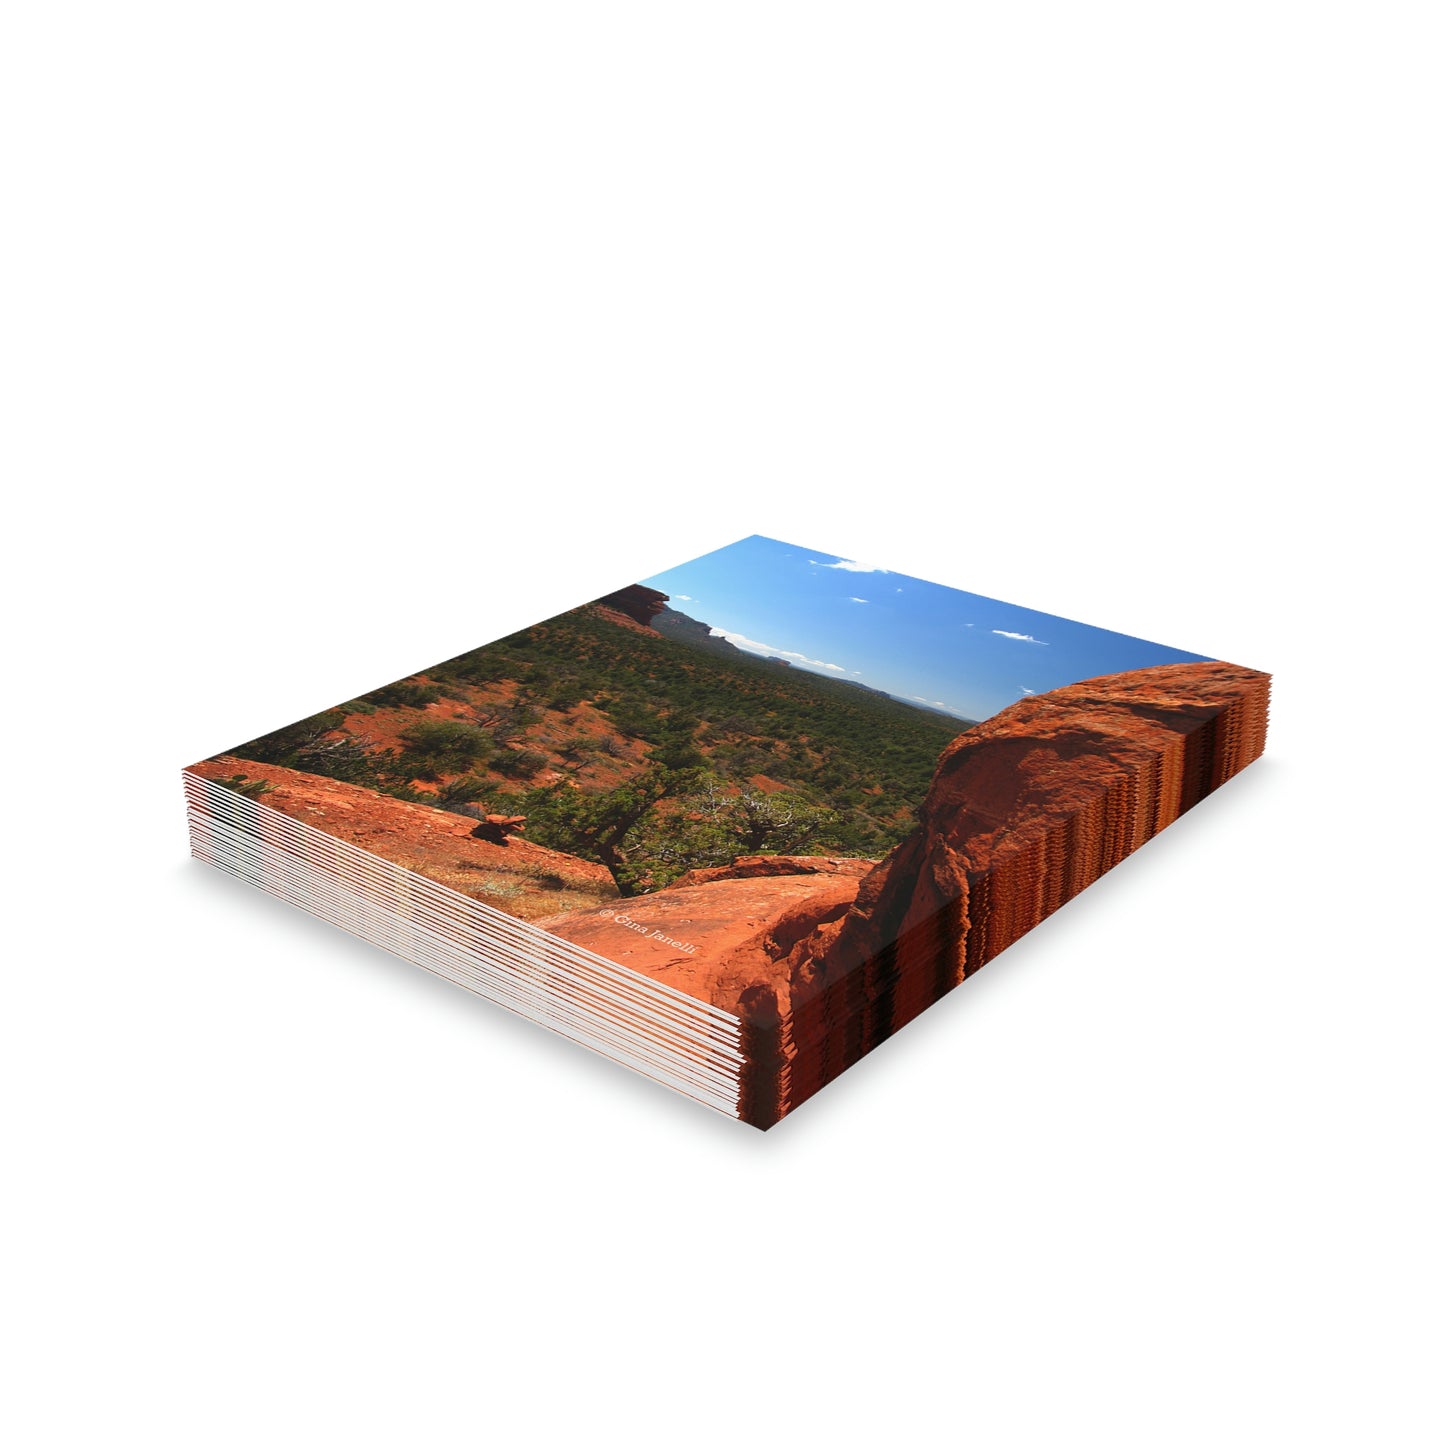 Red Rocks of Sedona Az.              Greeting cards (8, 16, and 24 pcs)